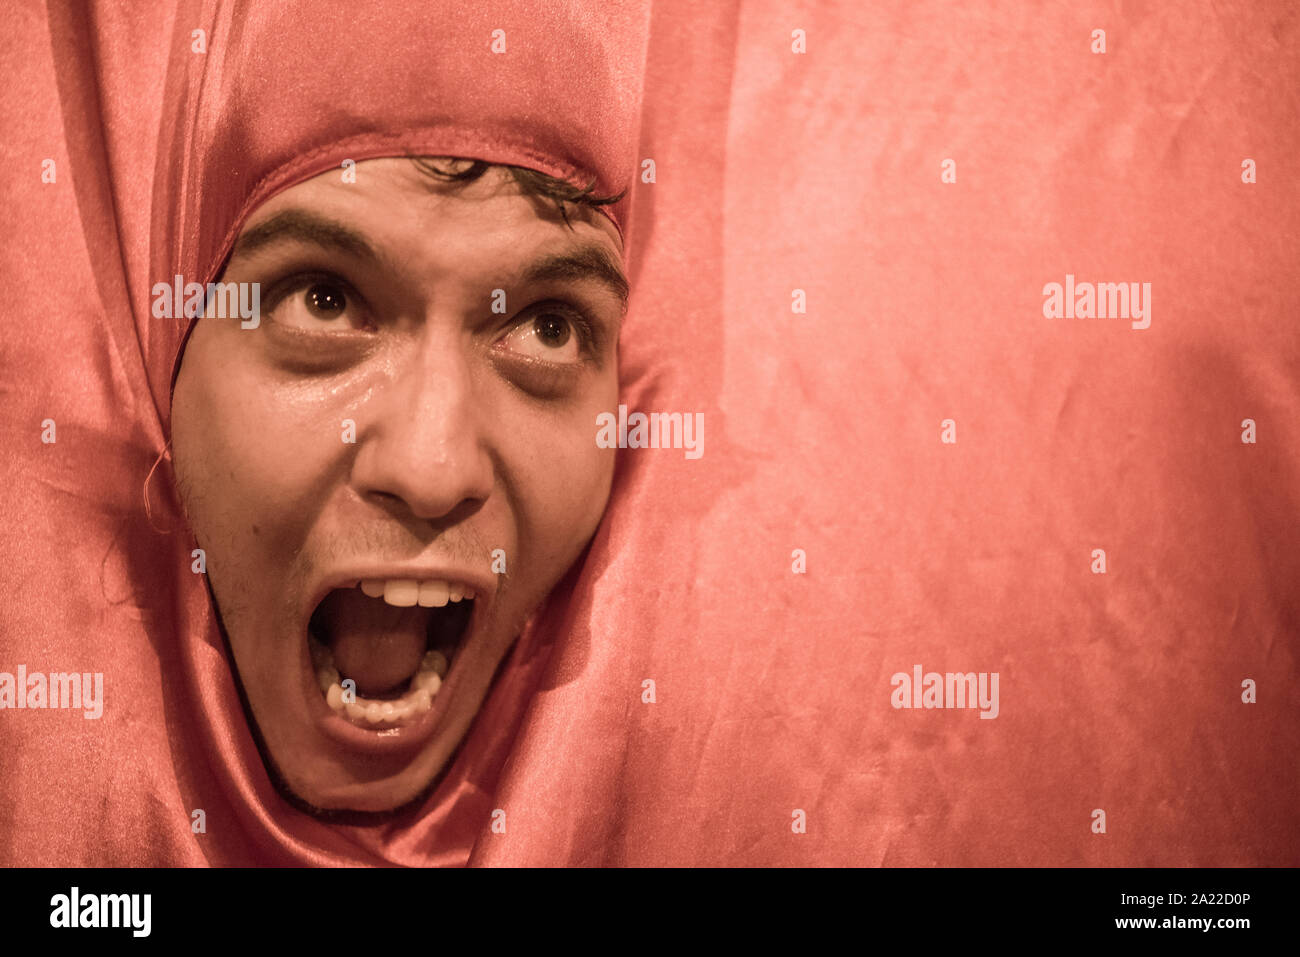 Man yelling wearing reddish carnival costume Stock Photo